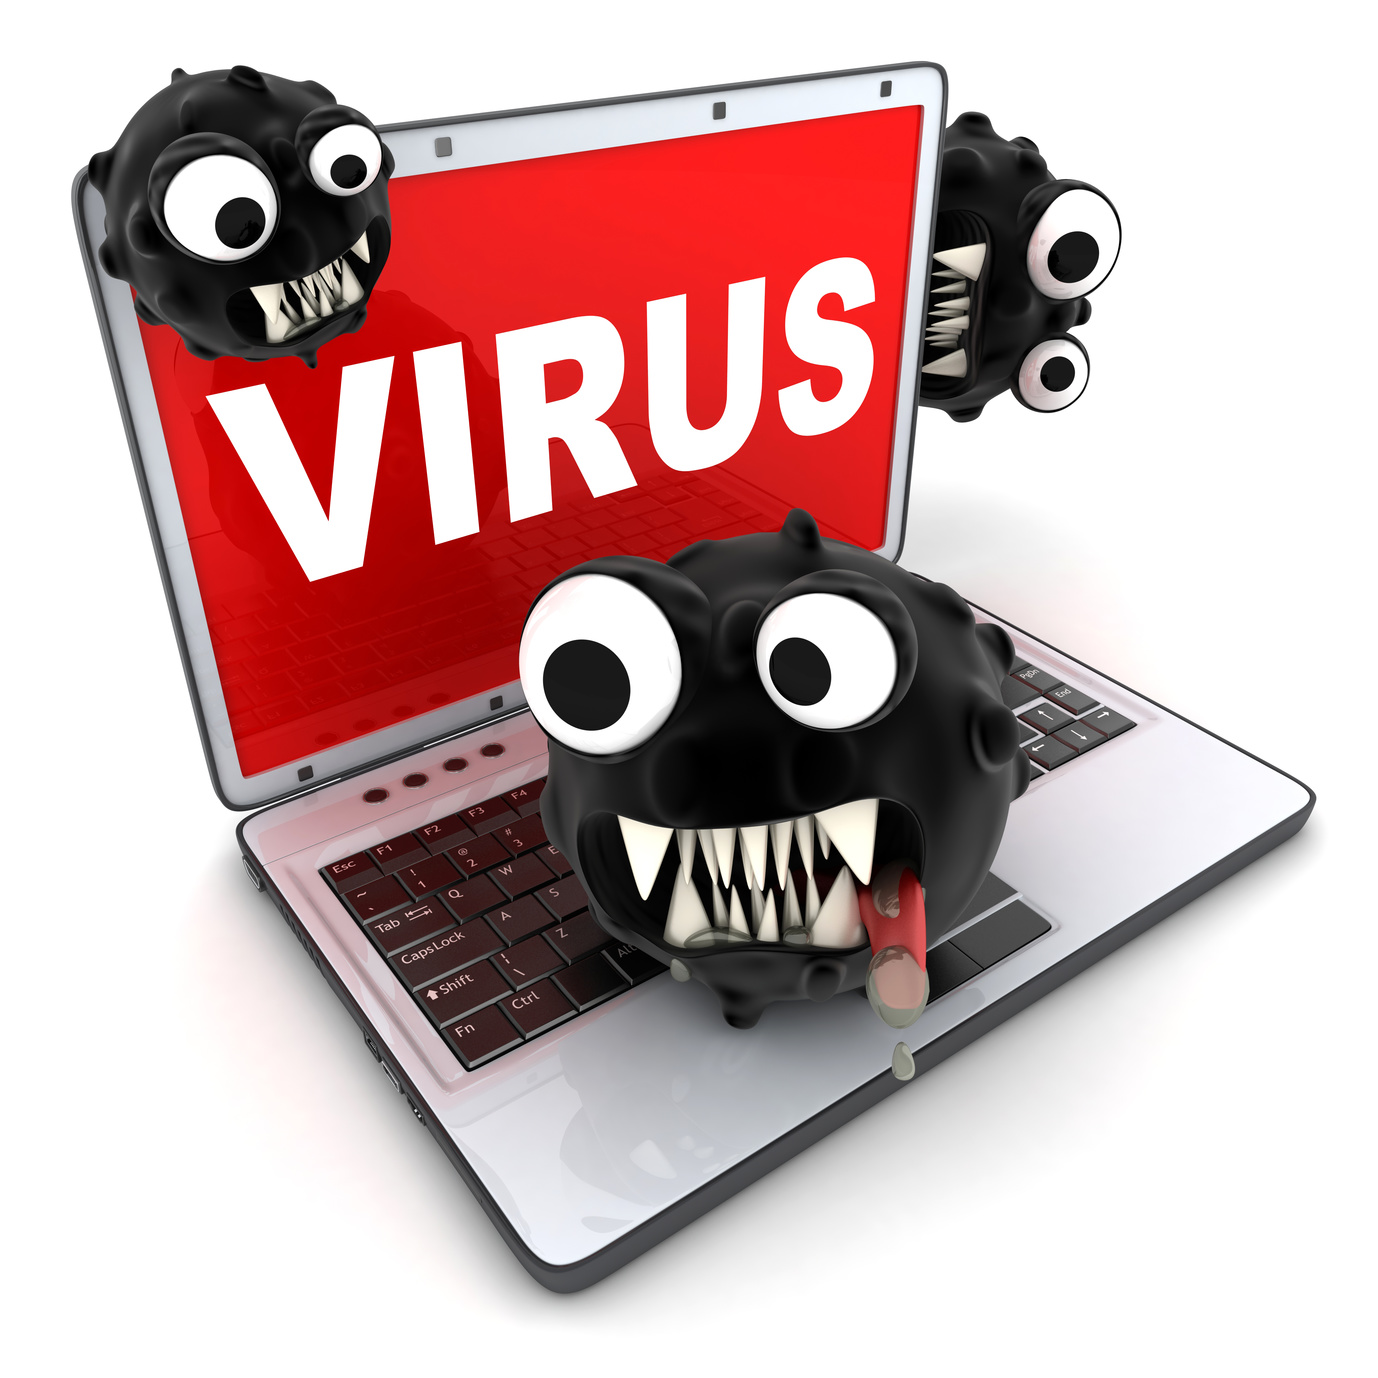 Recherche et Eradication de virus